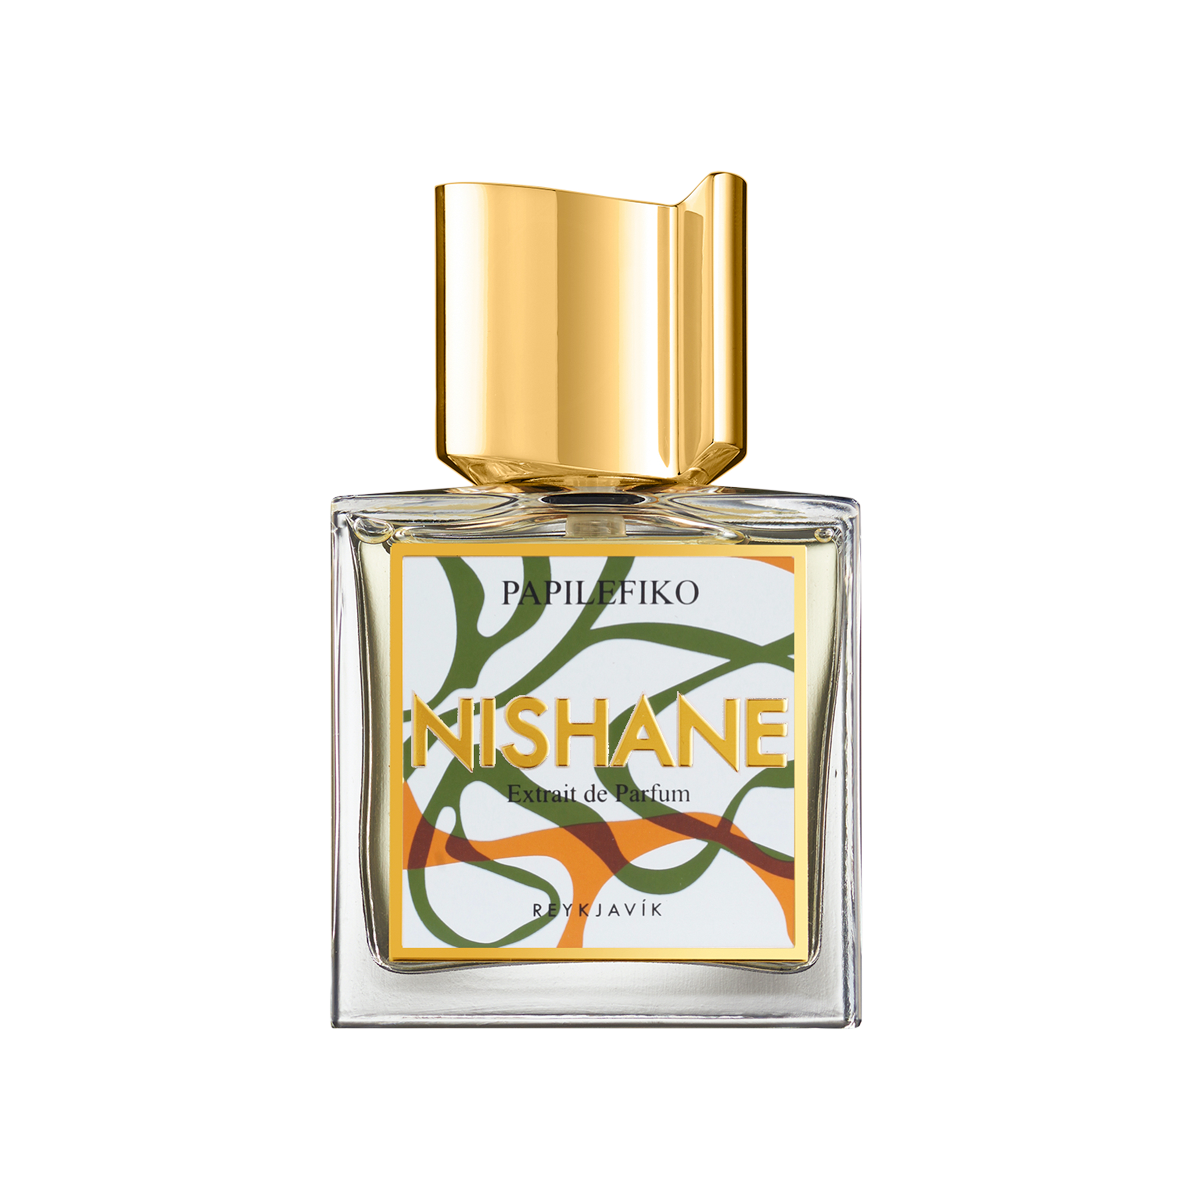 Nishane - Papilefiko Extrait de Parfum